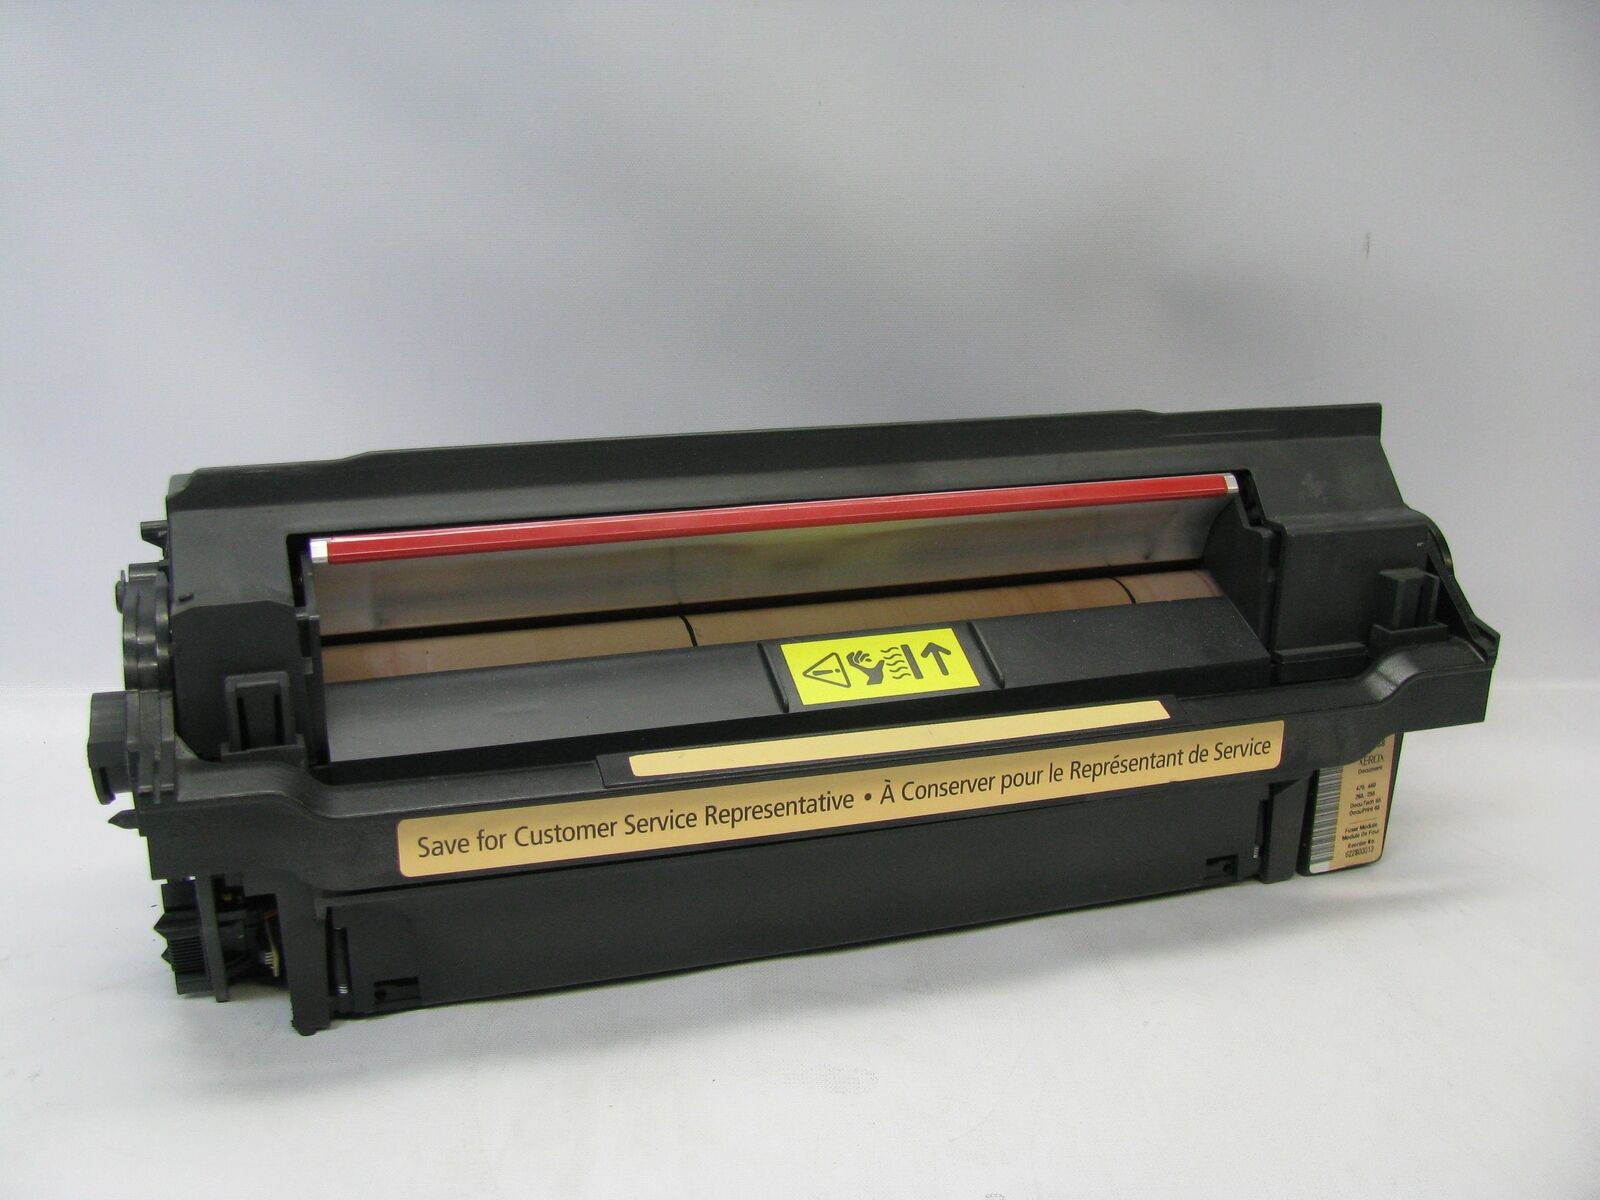 Xerox 109R330 Fuser Module